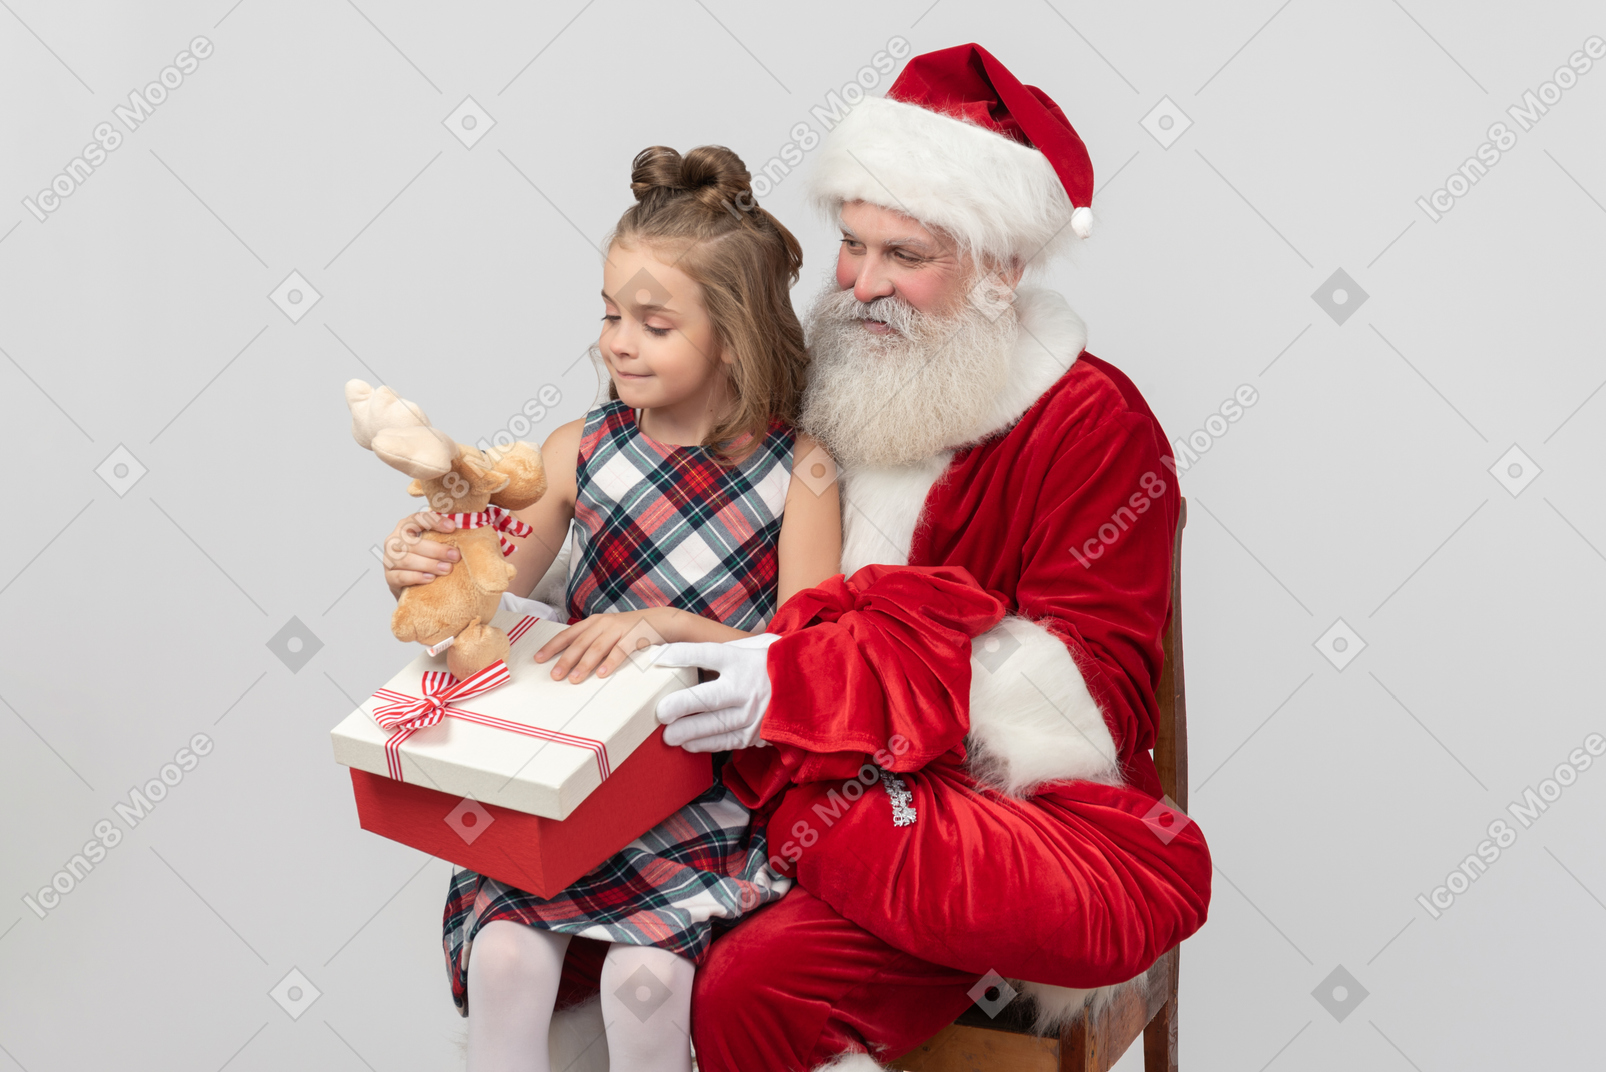 Kid girl sitting on santa's knees and holding deer stuffed toy